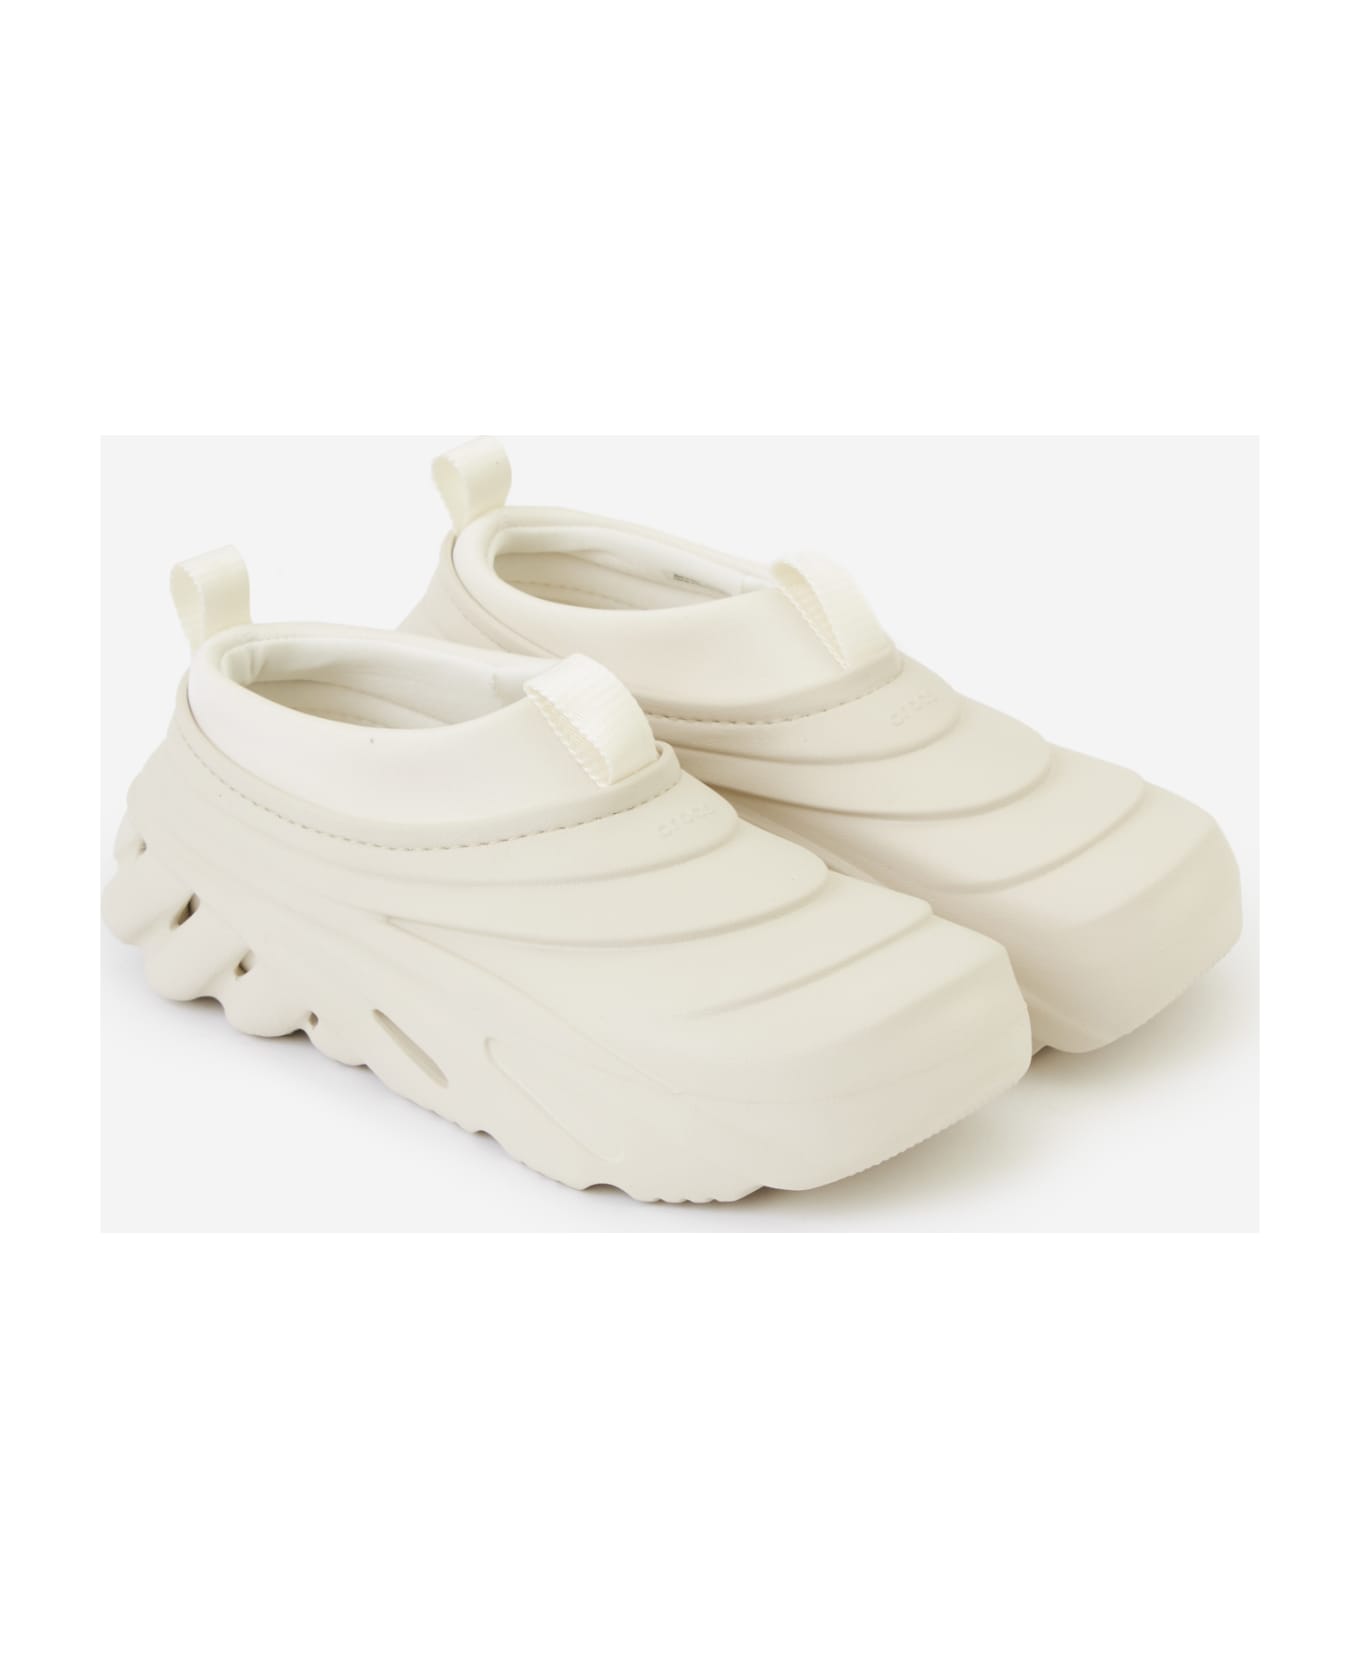 Crocs Echo Storm Shoes - white スニーカー